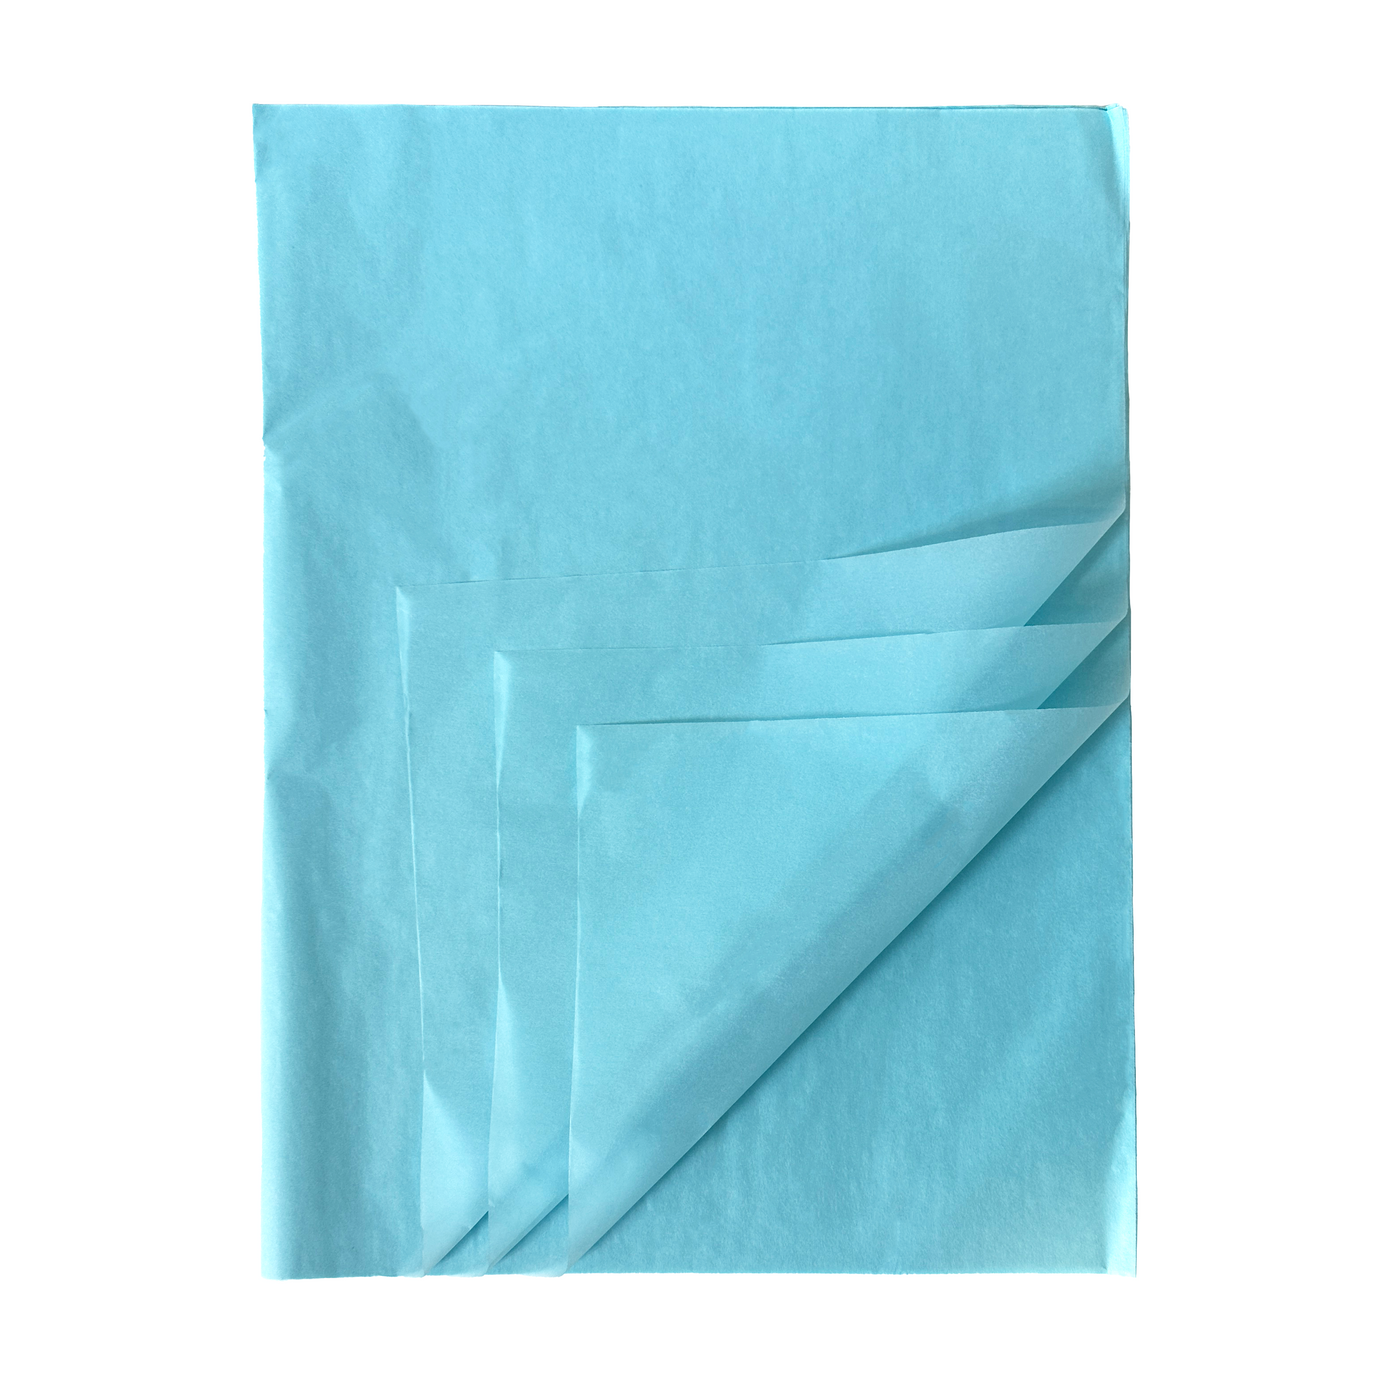 Acid-Free Tissue Paper - Blue